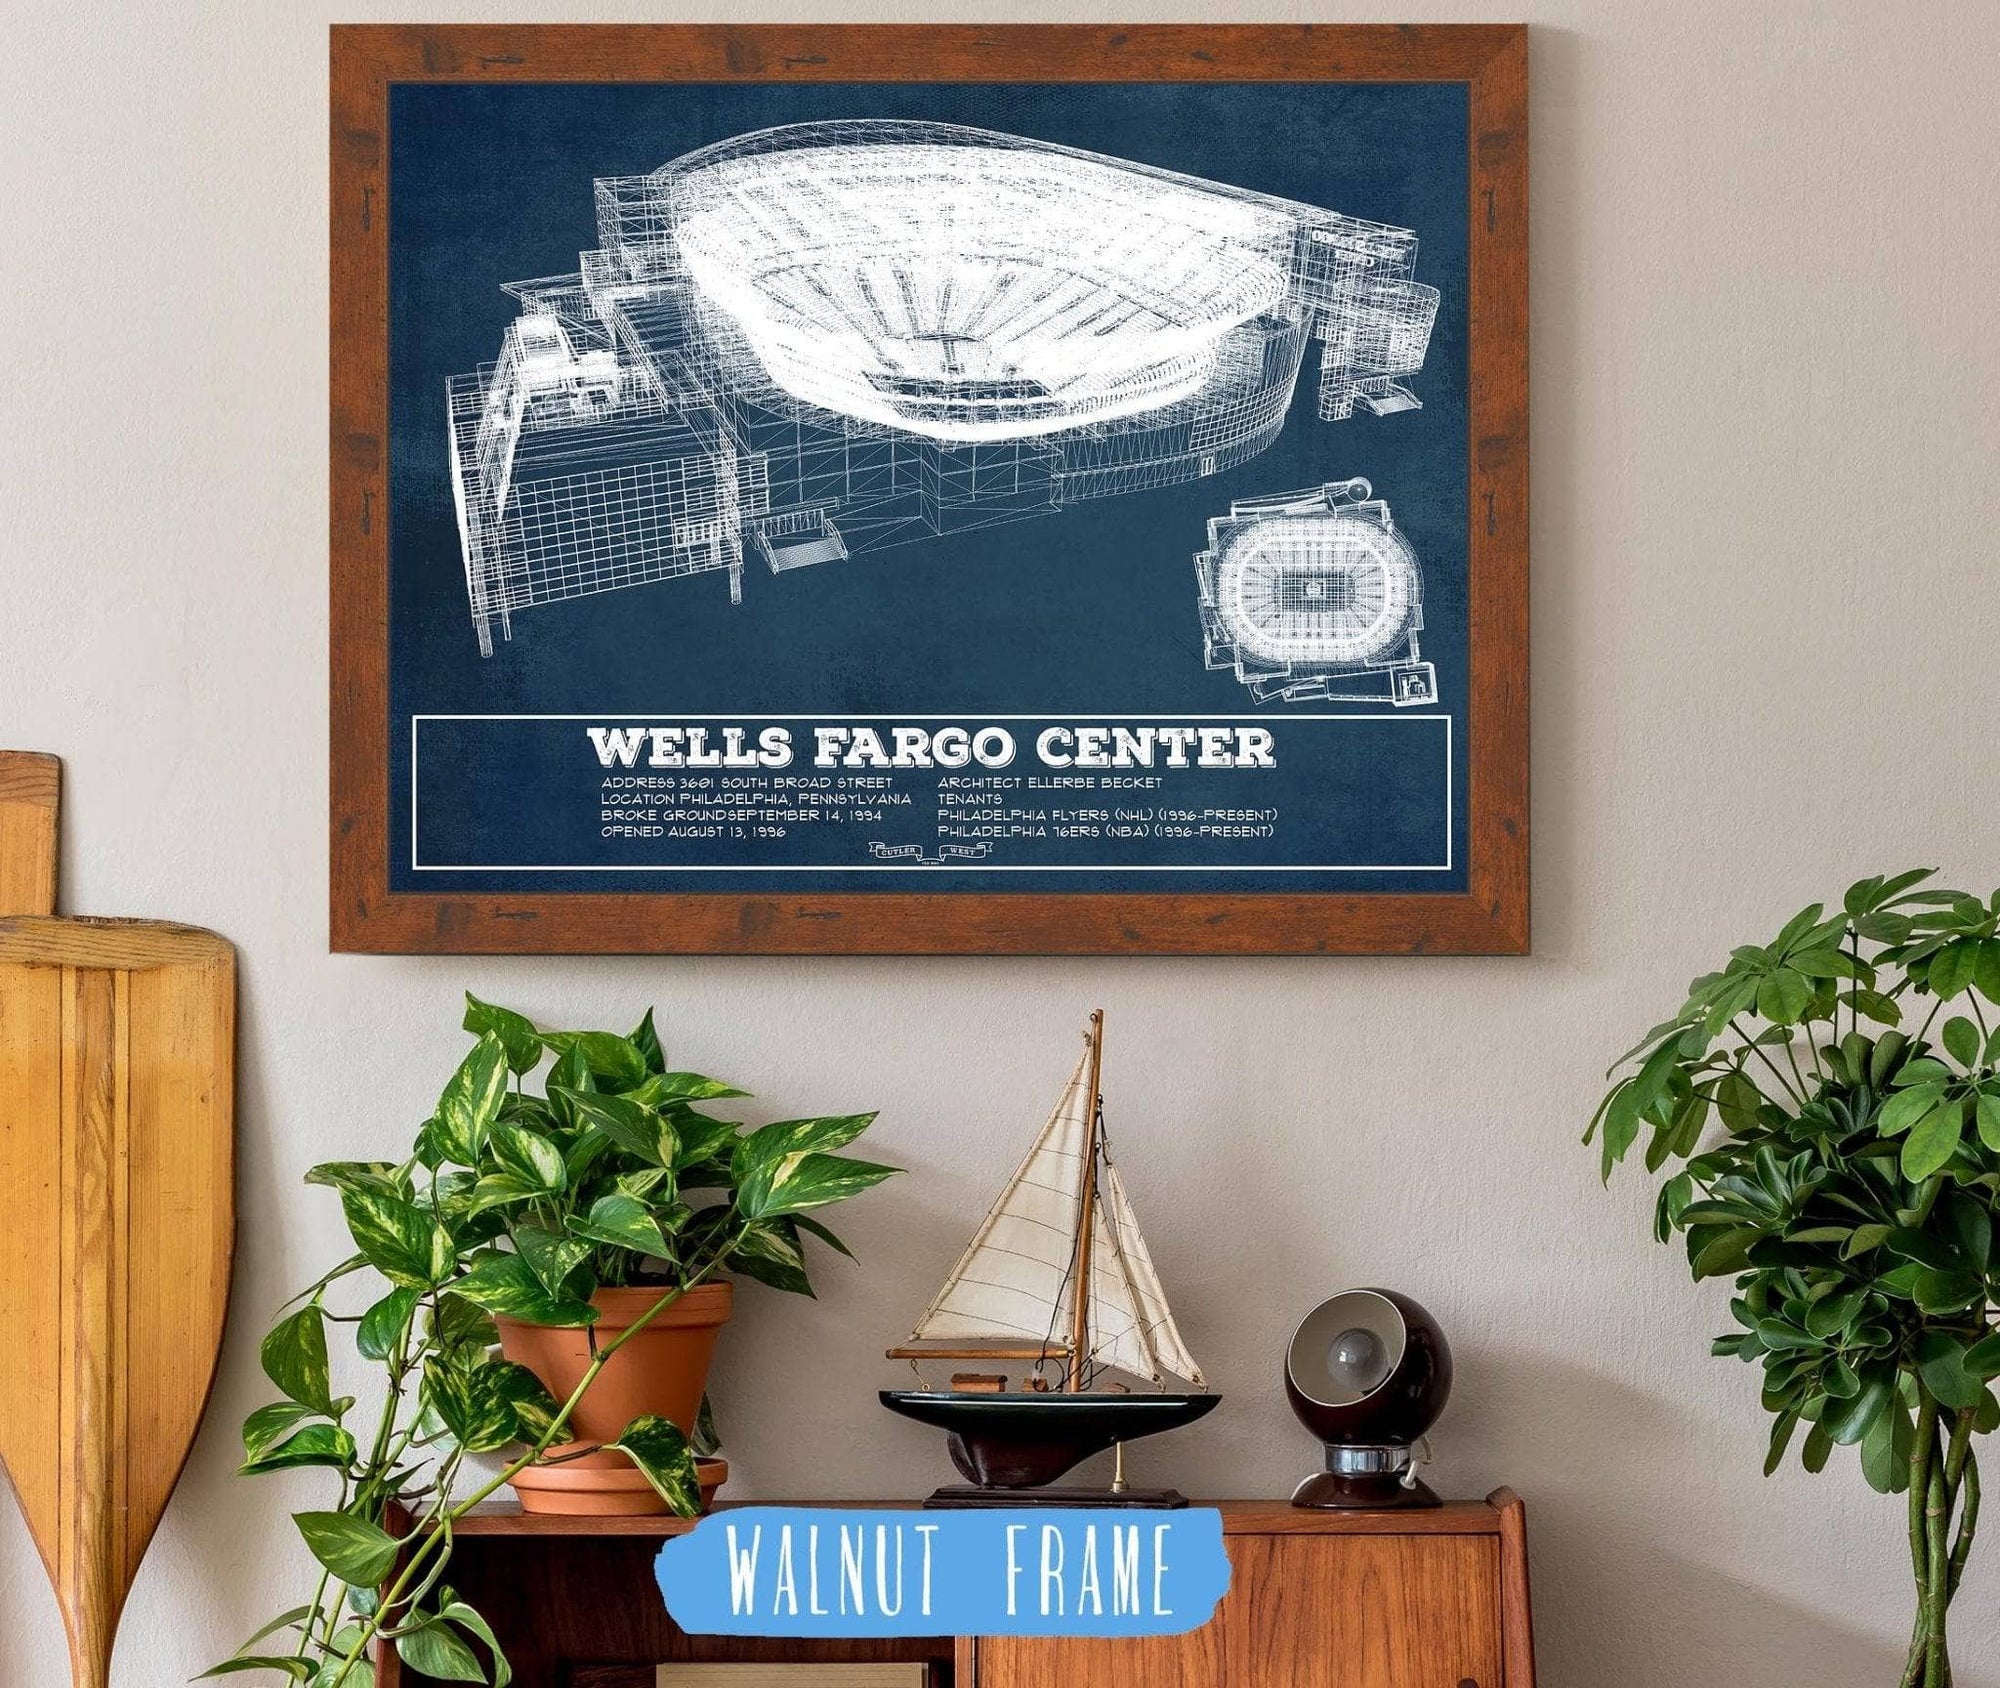 Cutler West 14" x 11" / Walnut Frame Philadelphia Flyers Wells Fargo Center Philadelphia Seating Chart - Vintage Hockey Print 698857444_30789